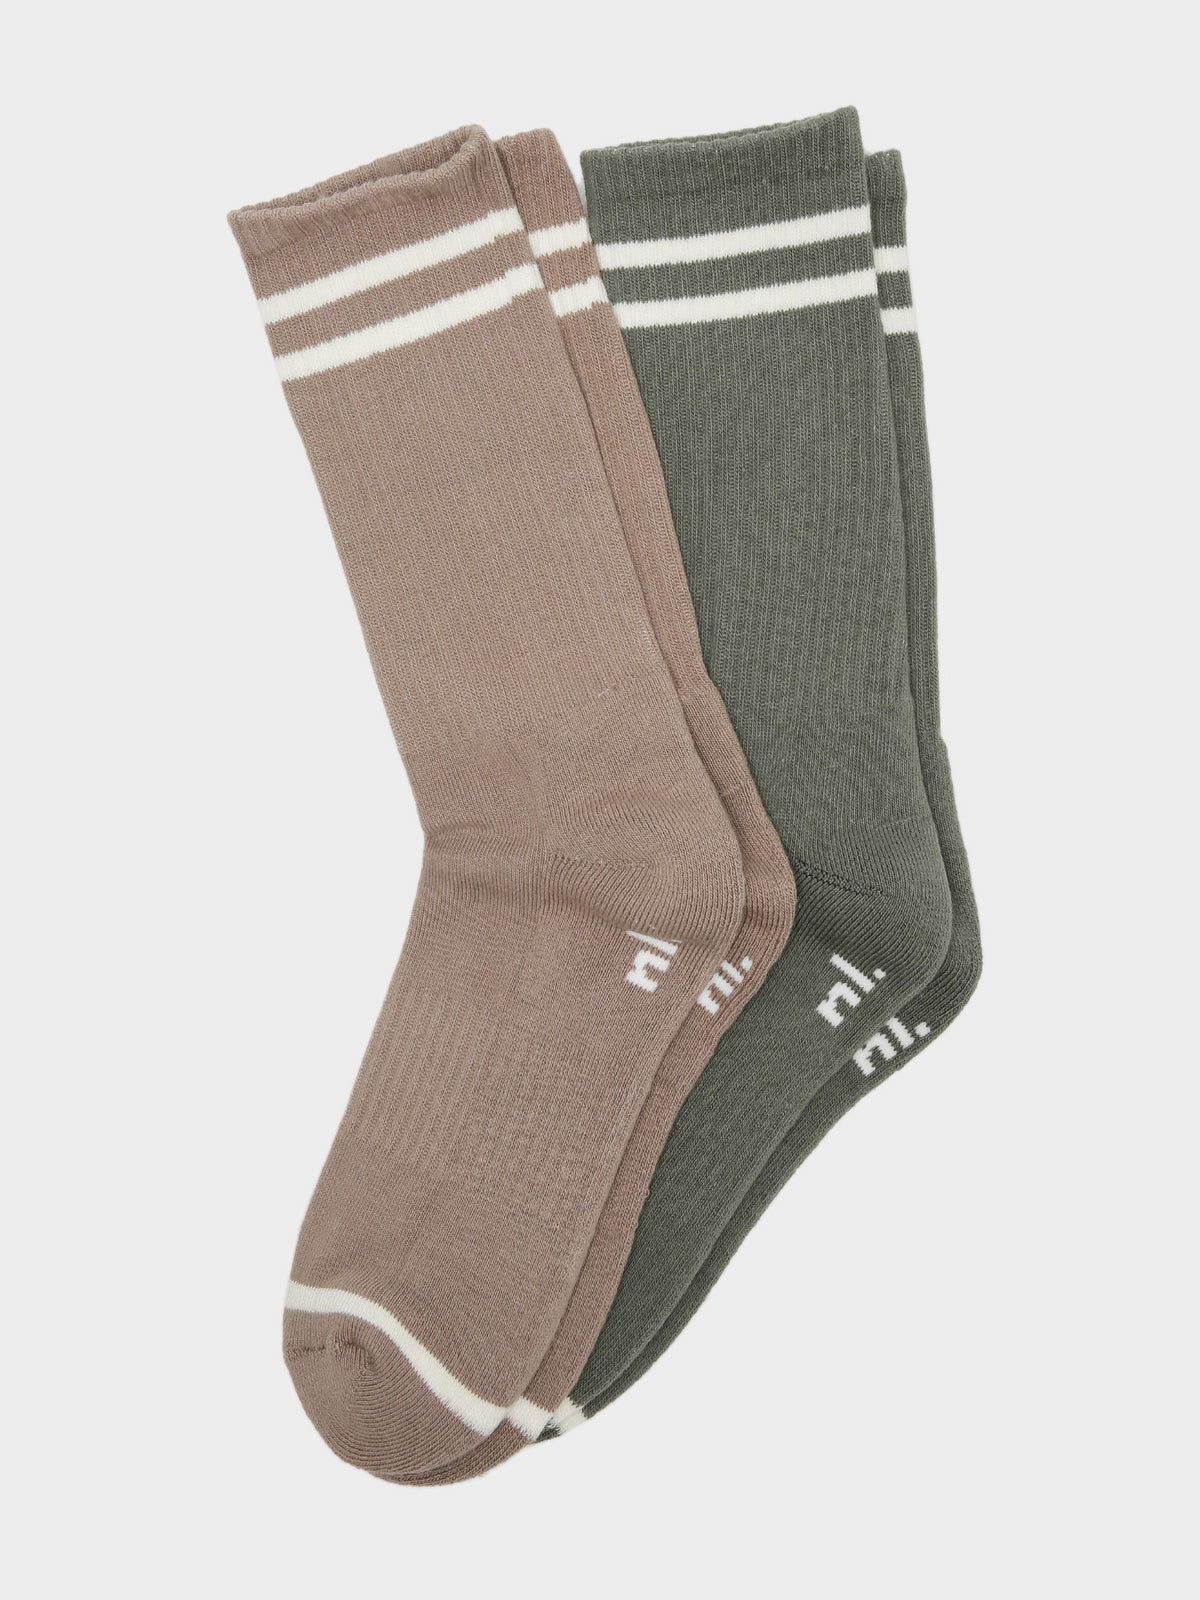 2 Pairs of Stripe Socks in Willow &amp; Caramel